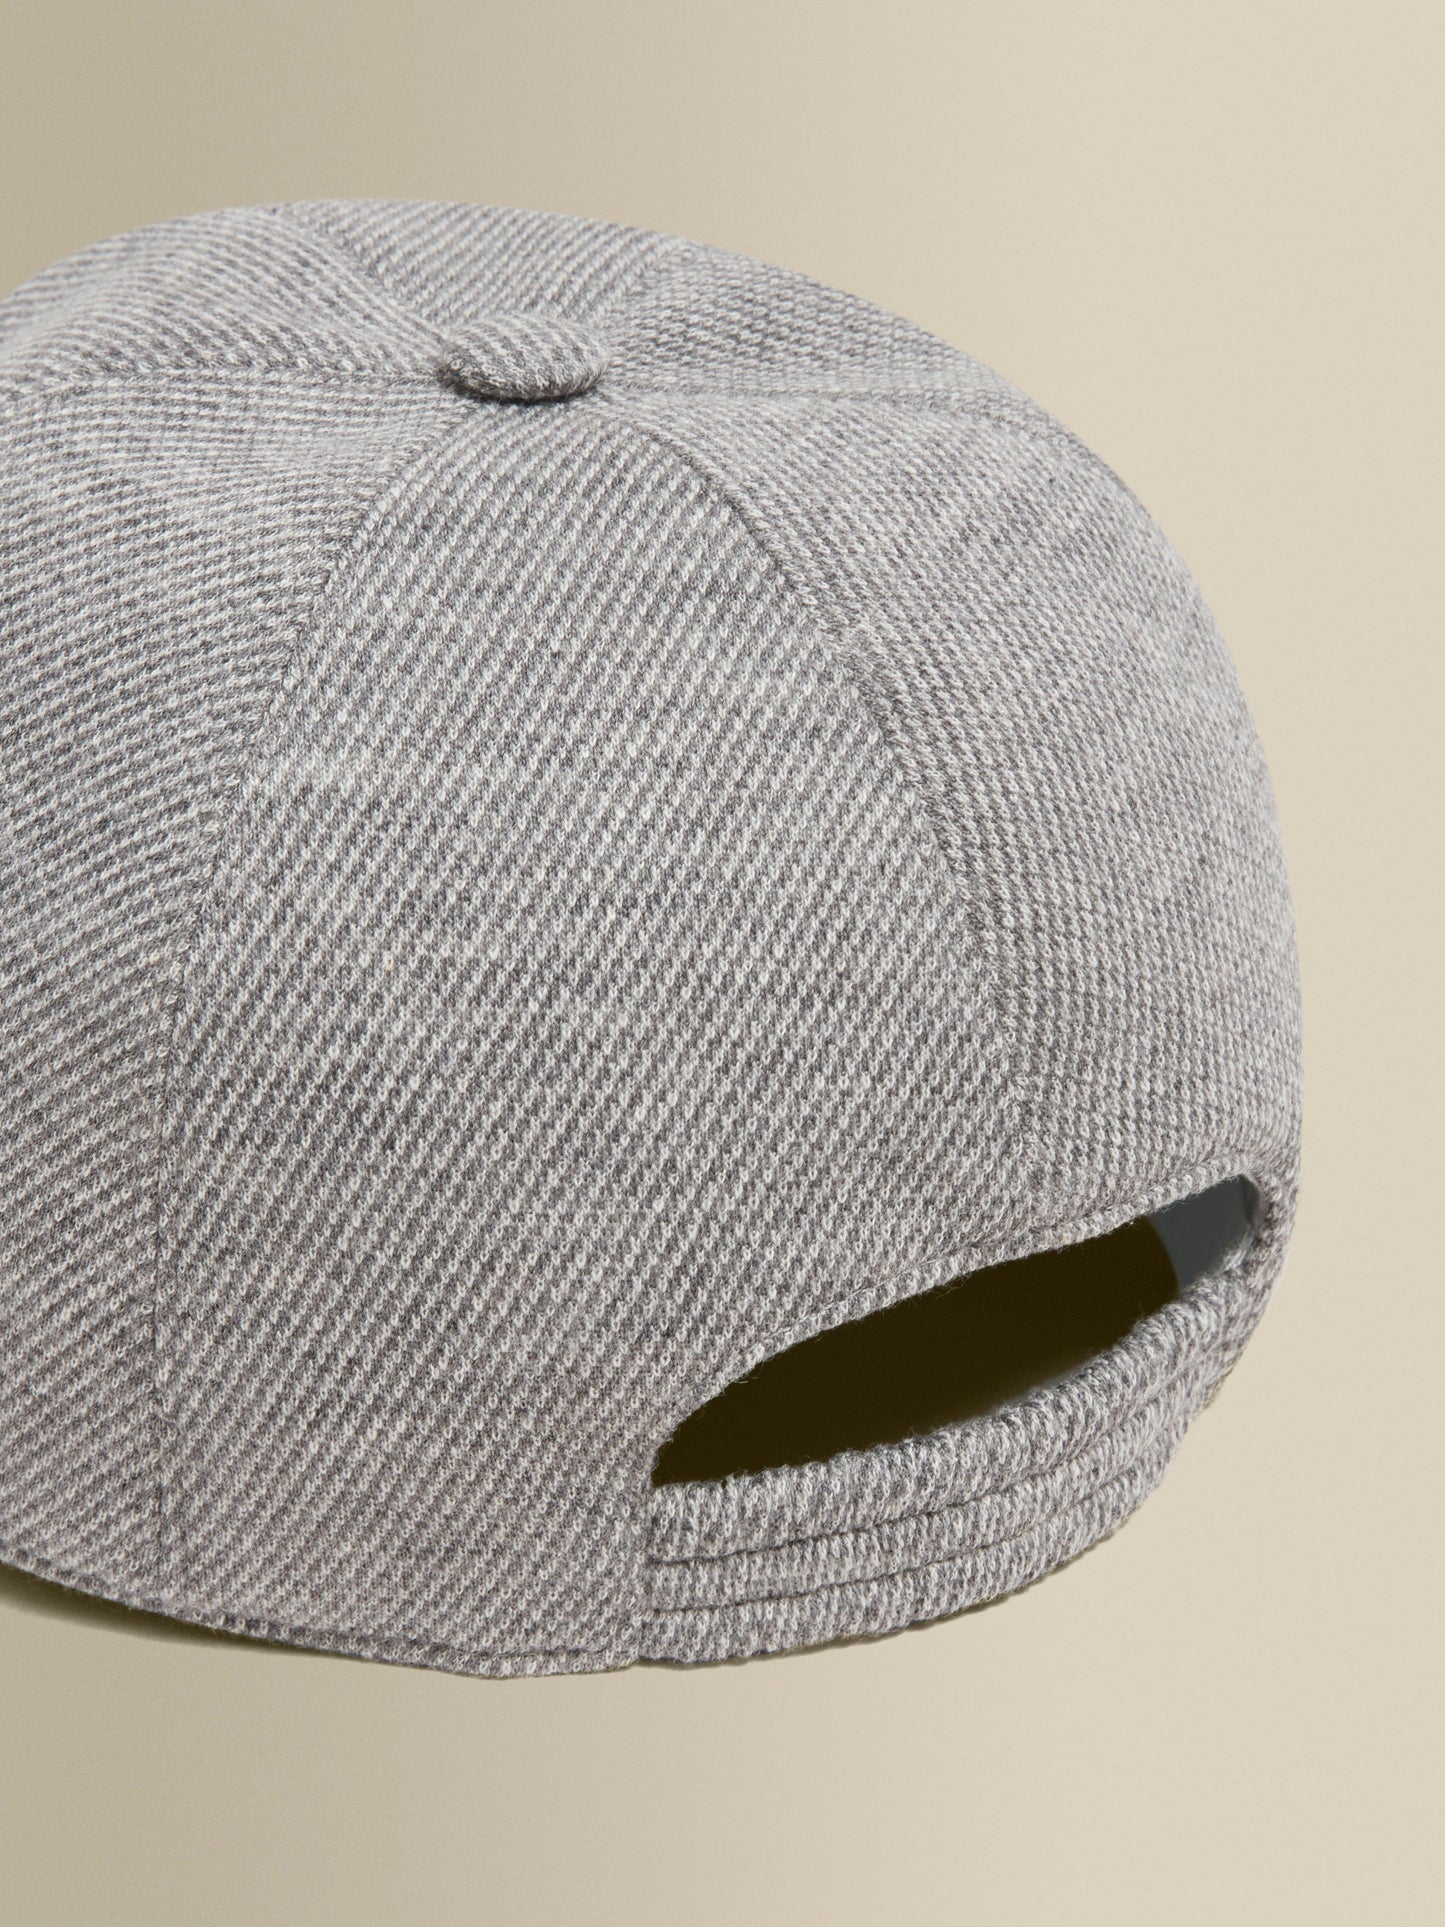 Wool Cotton Baseball Cap Grey Detail Product Image